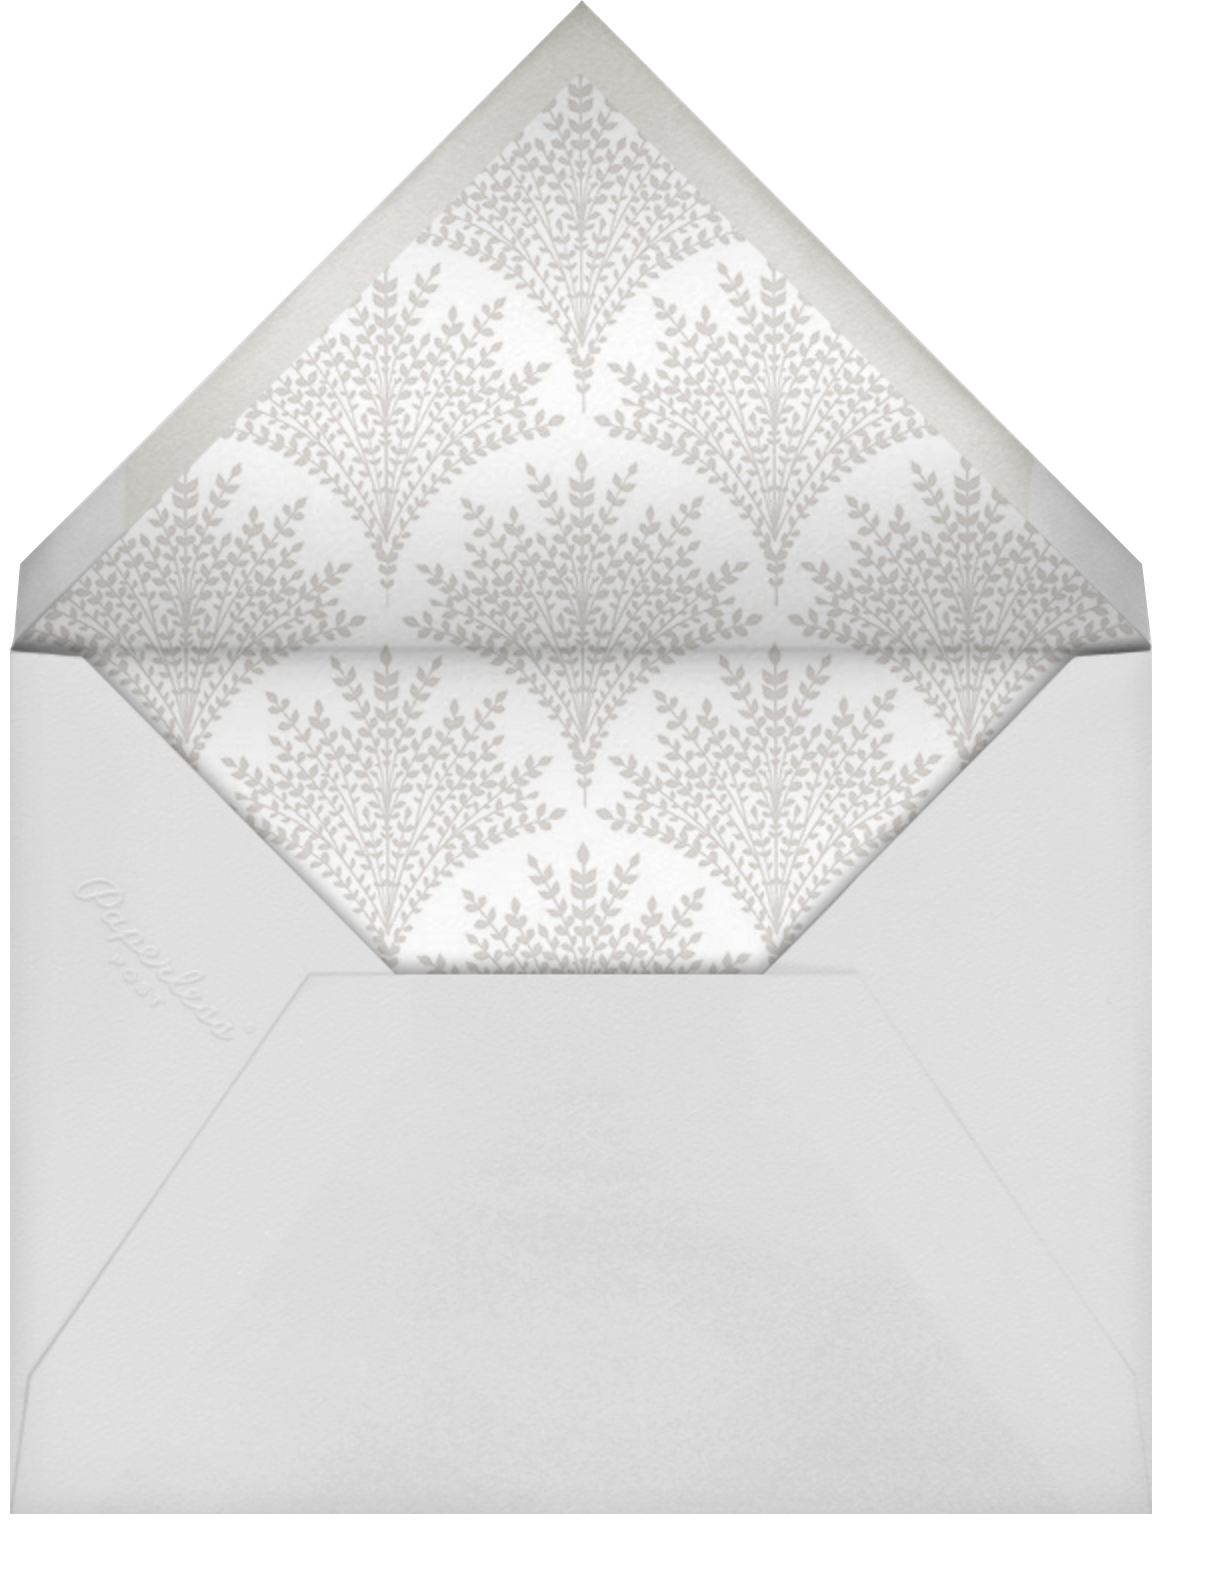 Fanned Frond (Invitation) - White - Carolina Herrera - Envelope